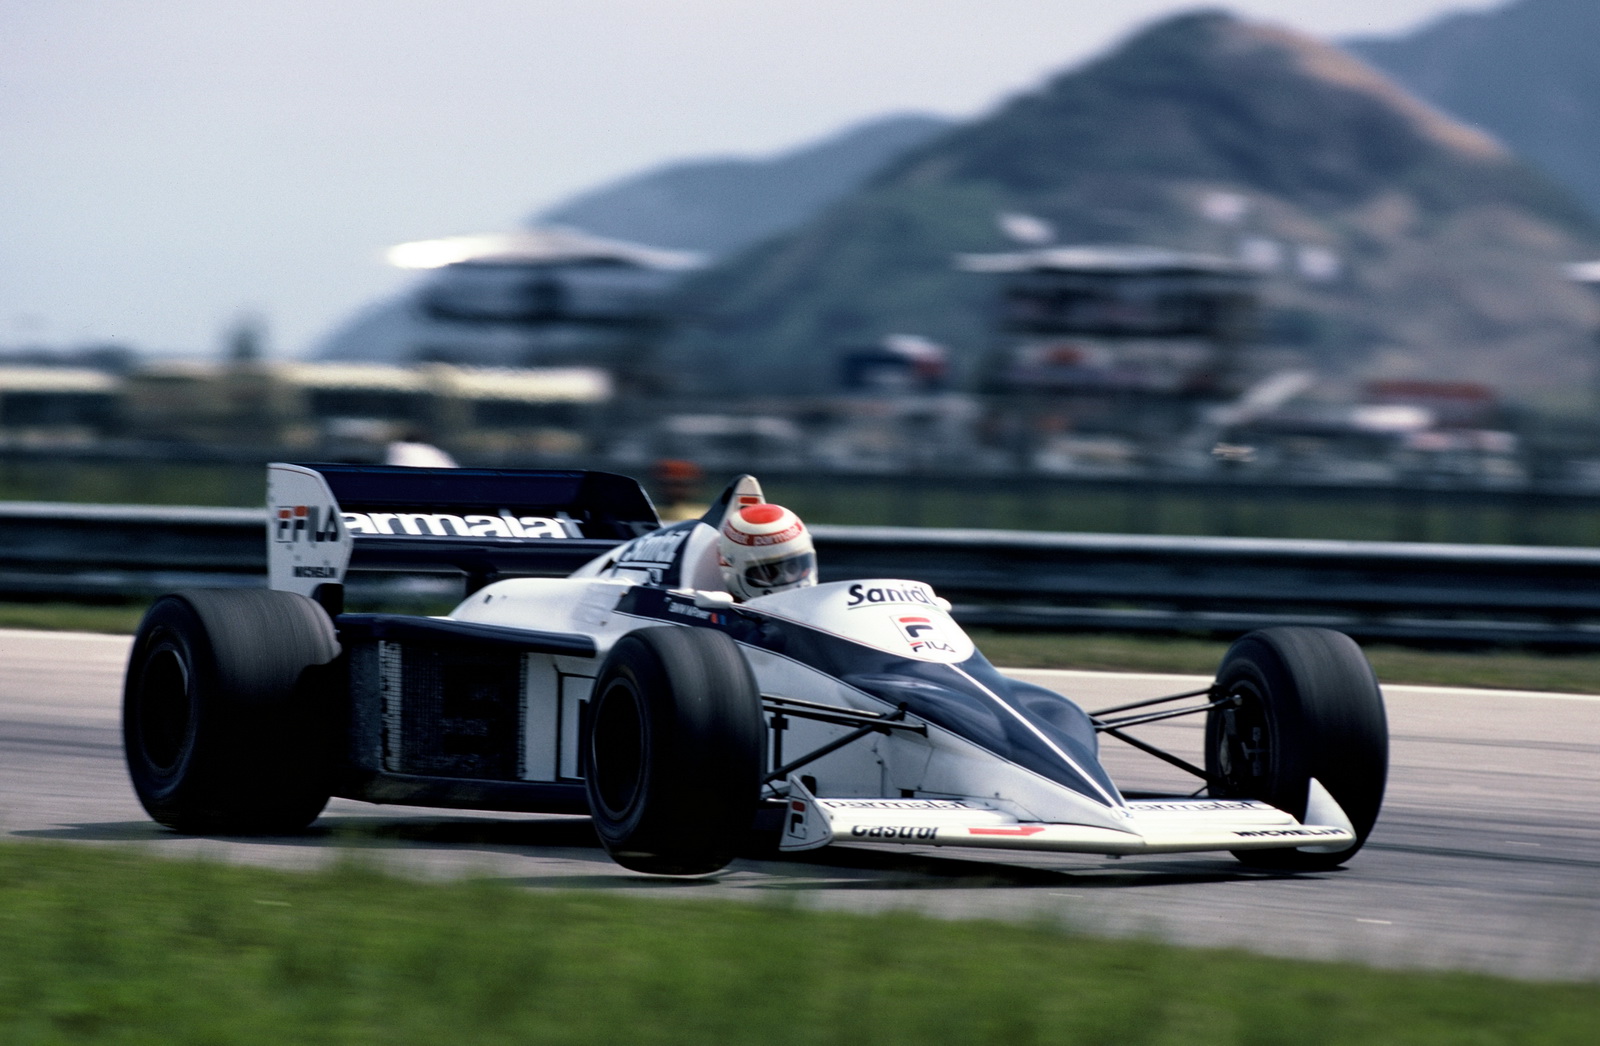 BT-52 คือรถ Formula One รุ่นแรกที่ใช้เครื่องเทอร์โบและได้แชมป์มาครอง